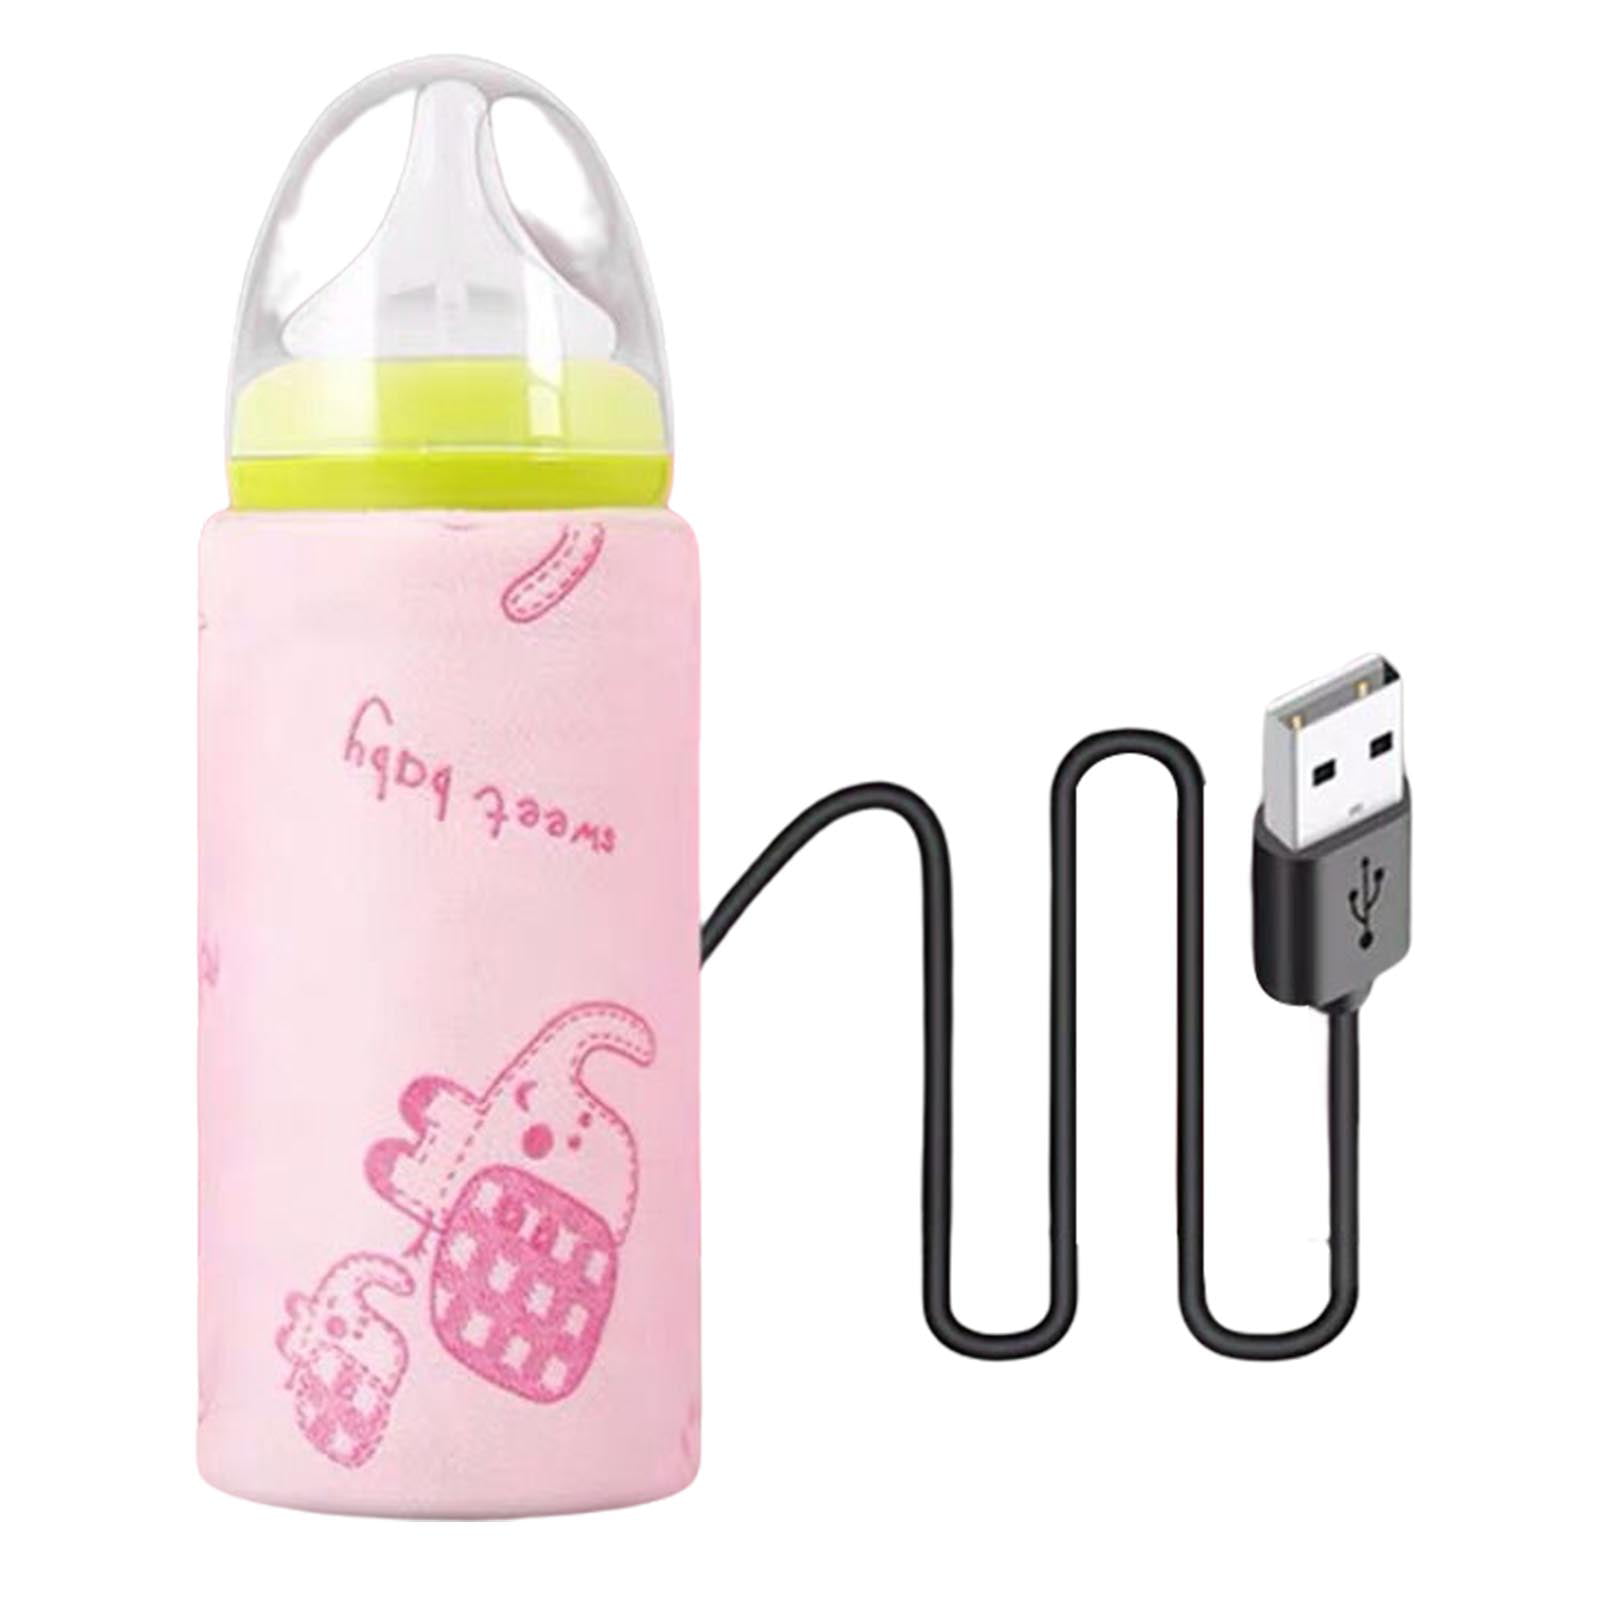 Careslong Milk Water Heater with USB Port Universal Baby Heater -